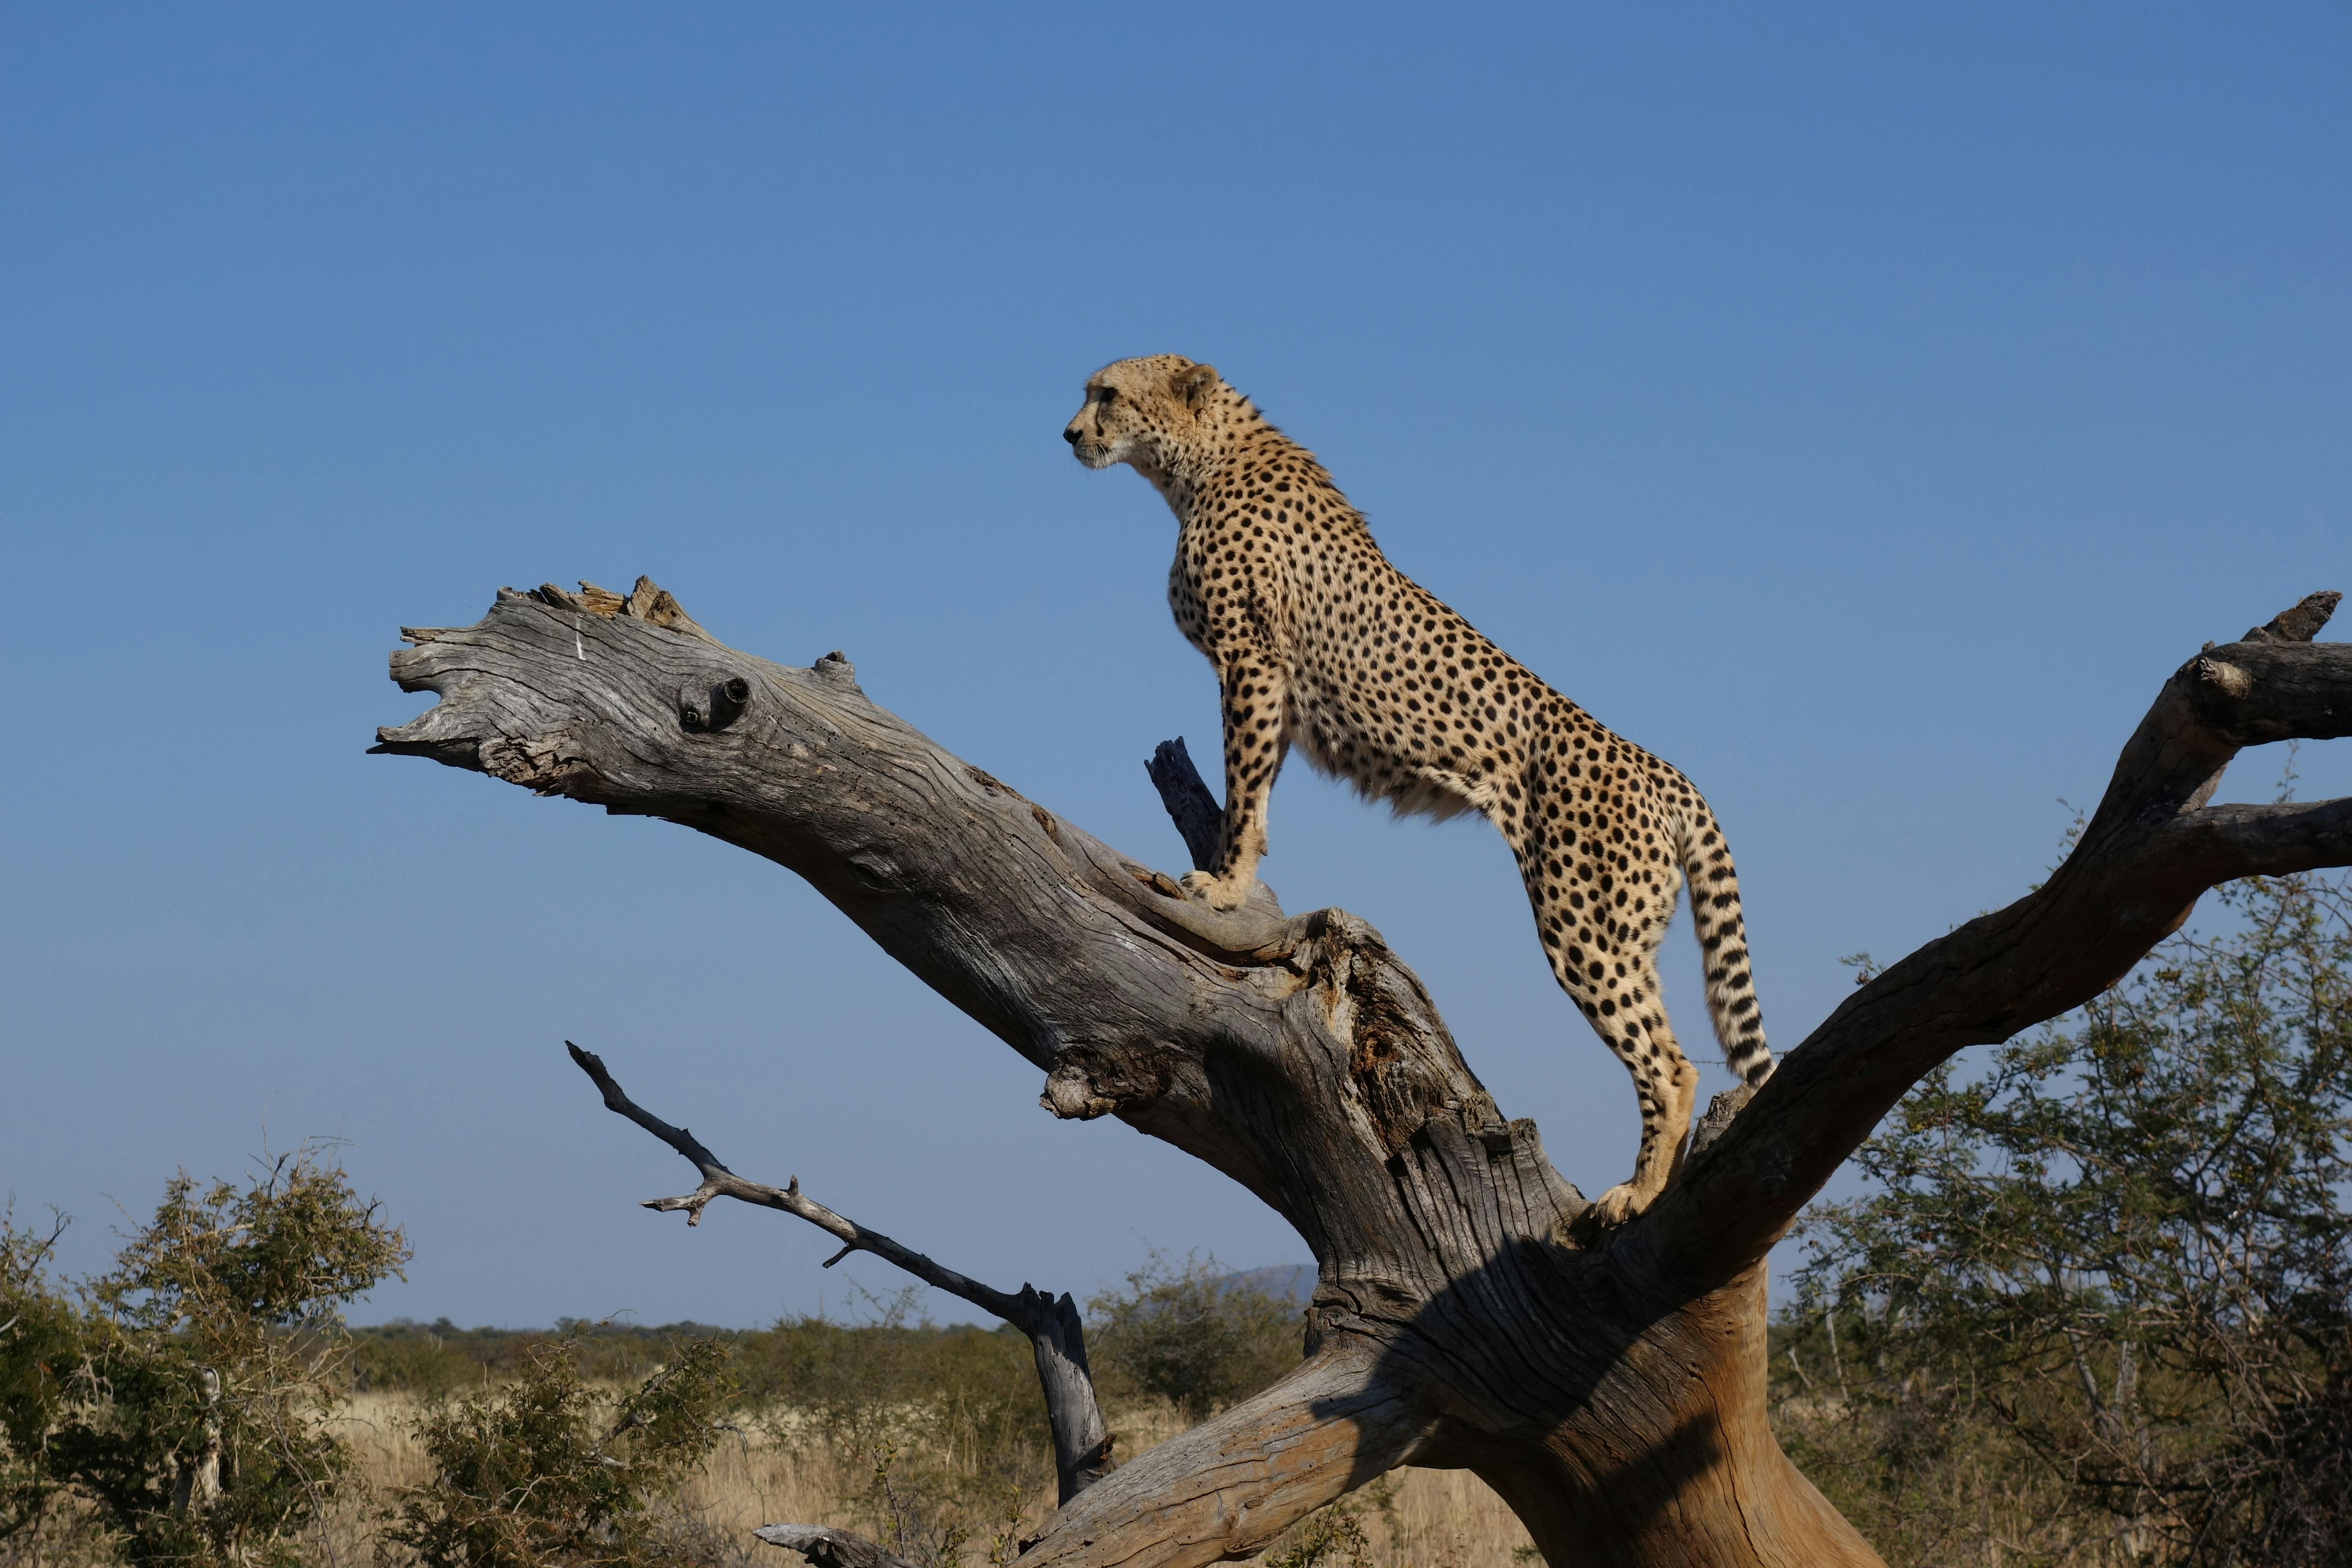 cheetah wallpaper hd 1080p